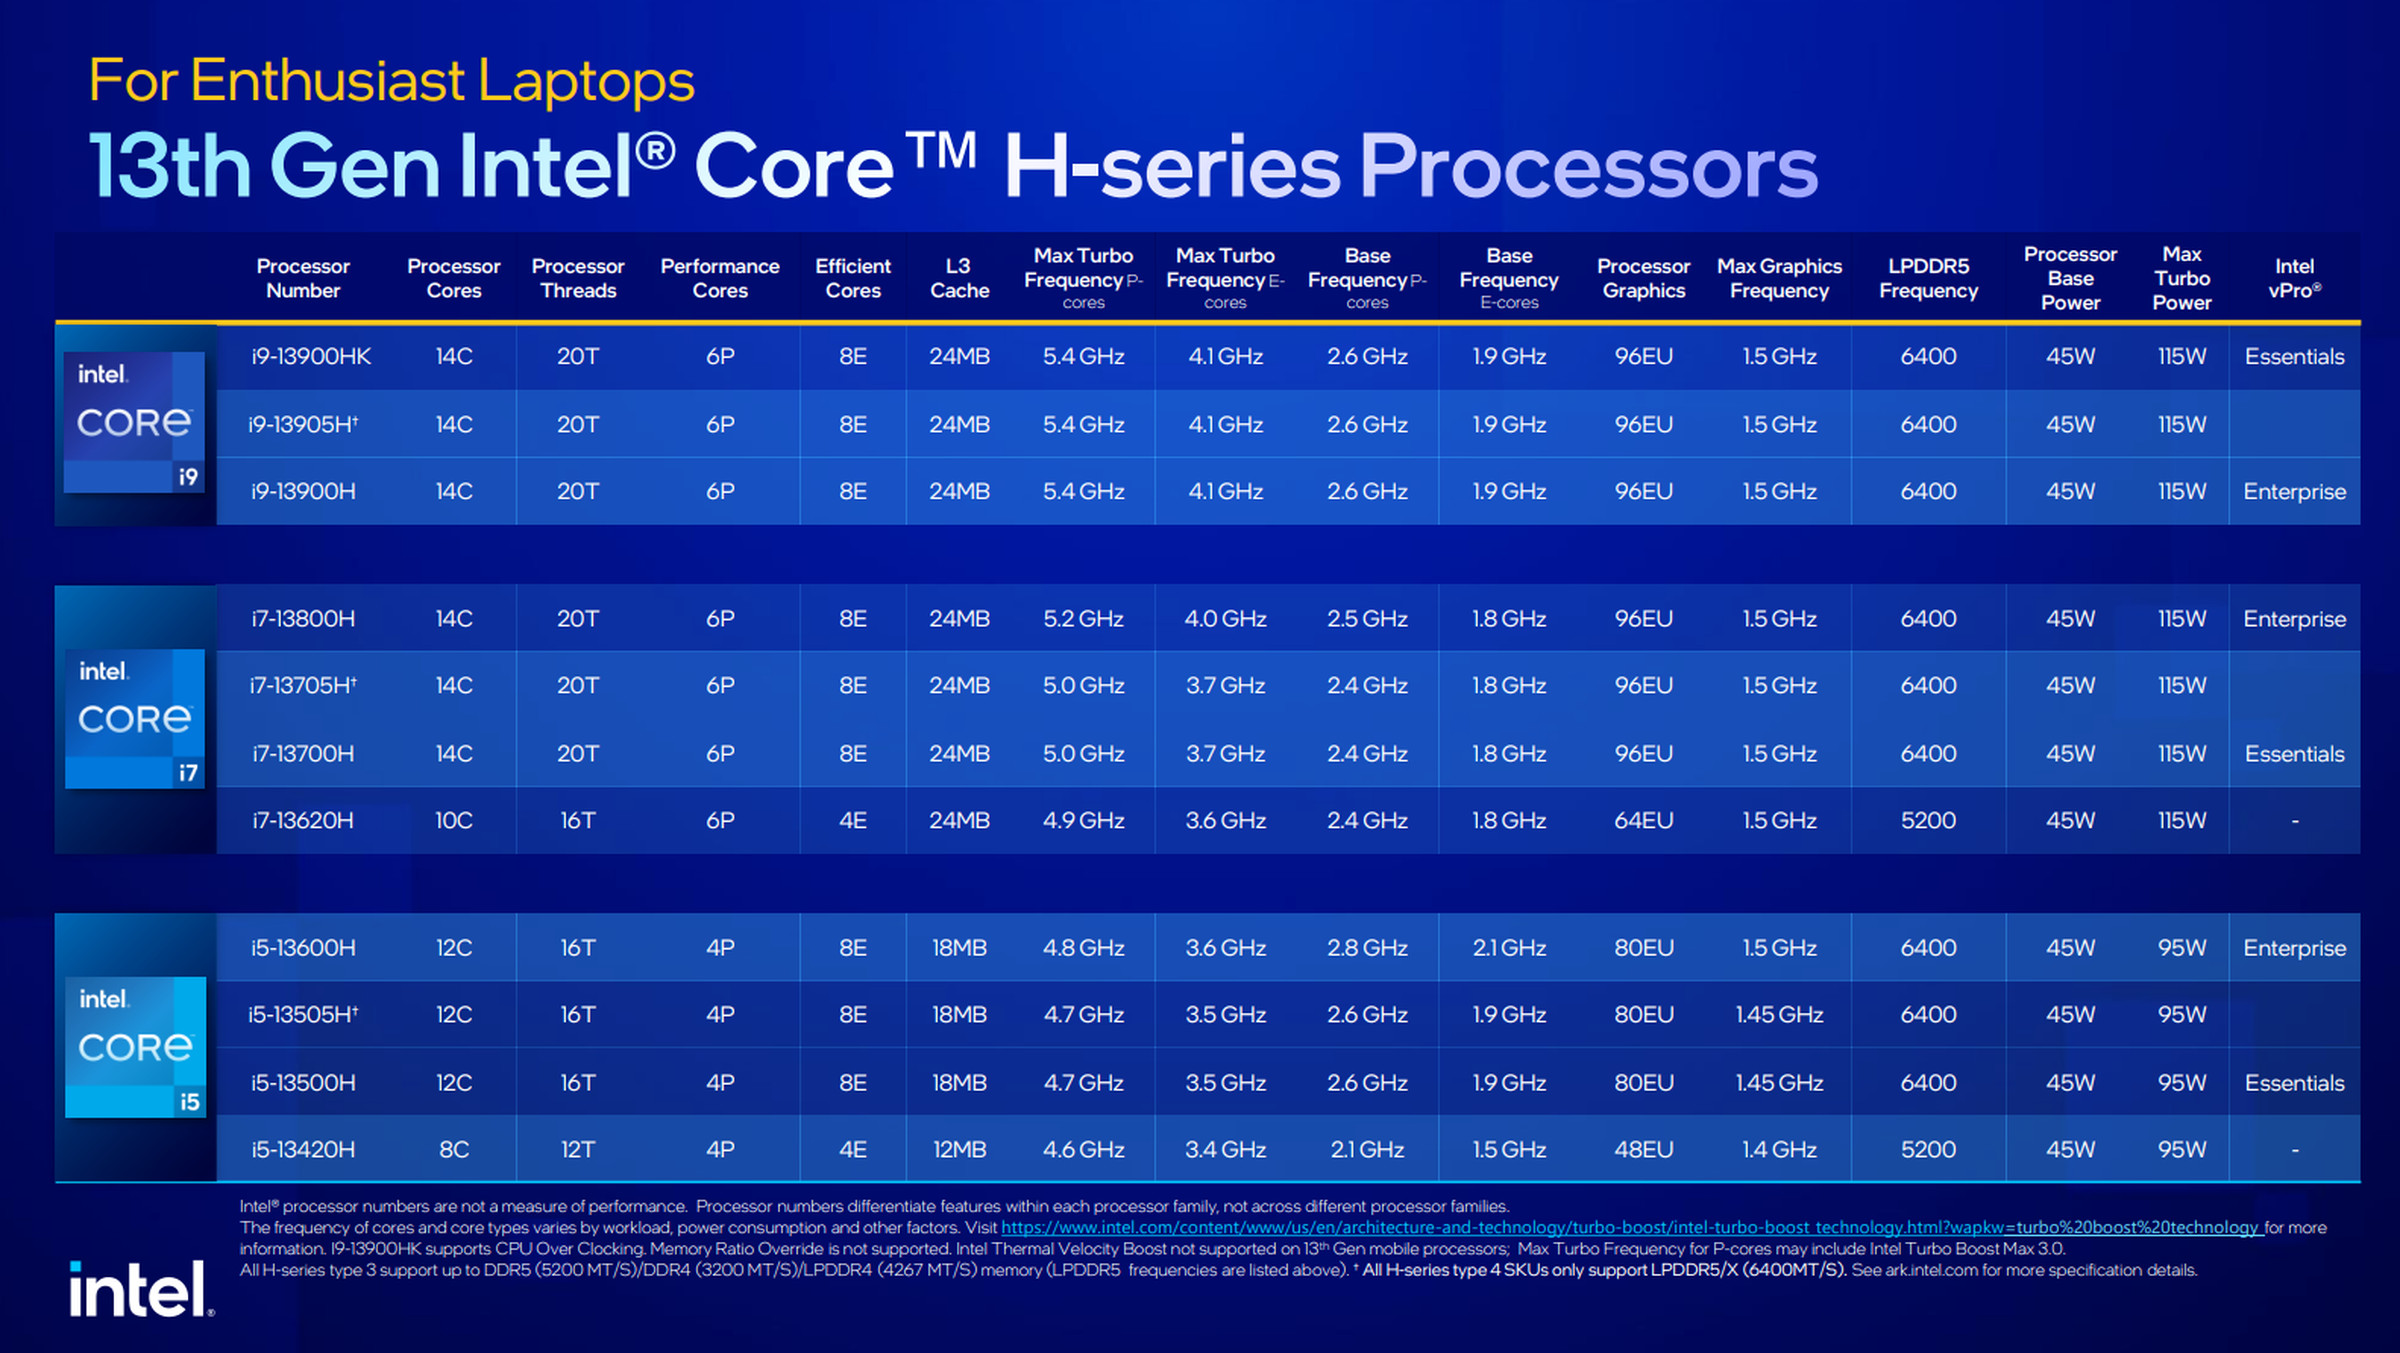 Intel’s 13th Gen H-series lineup.